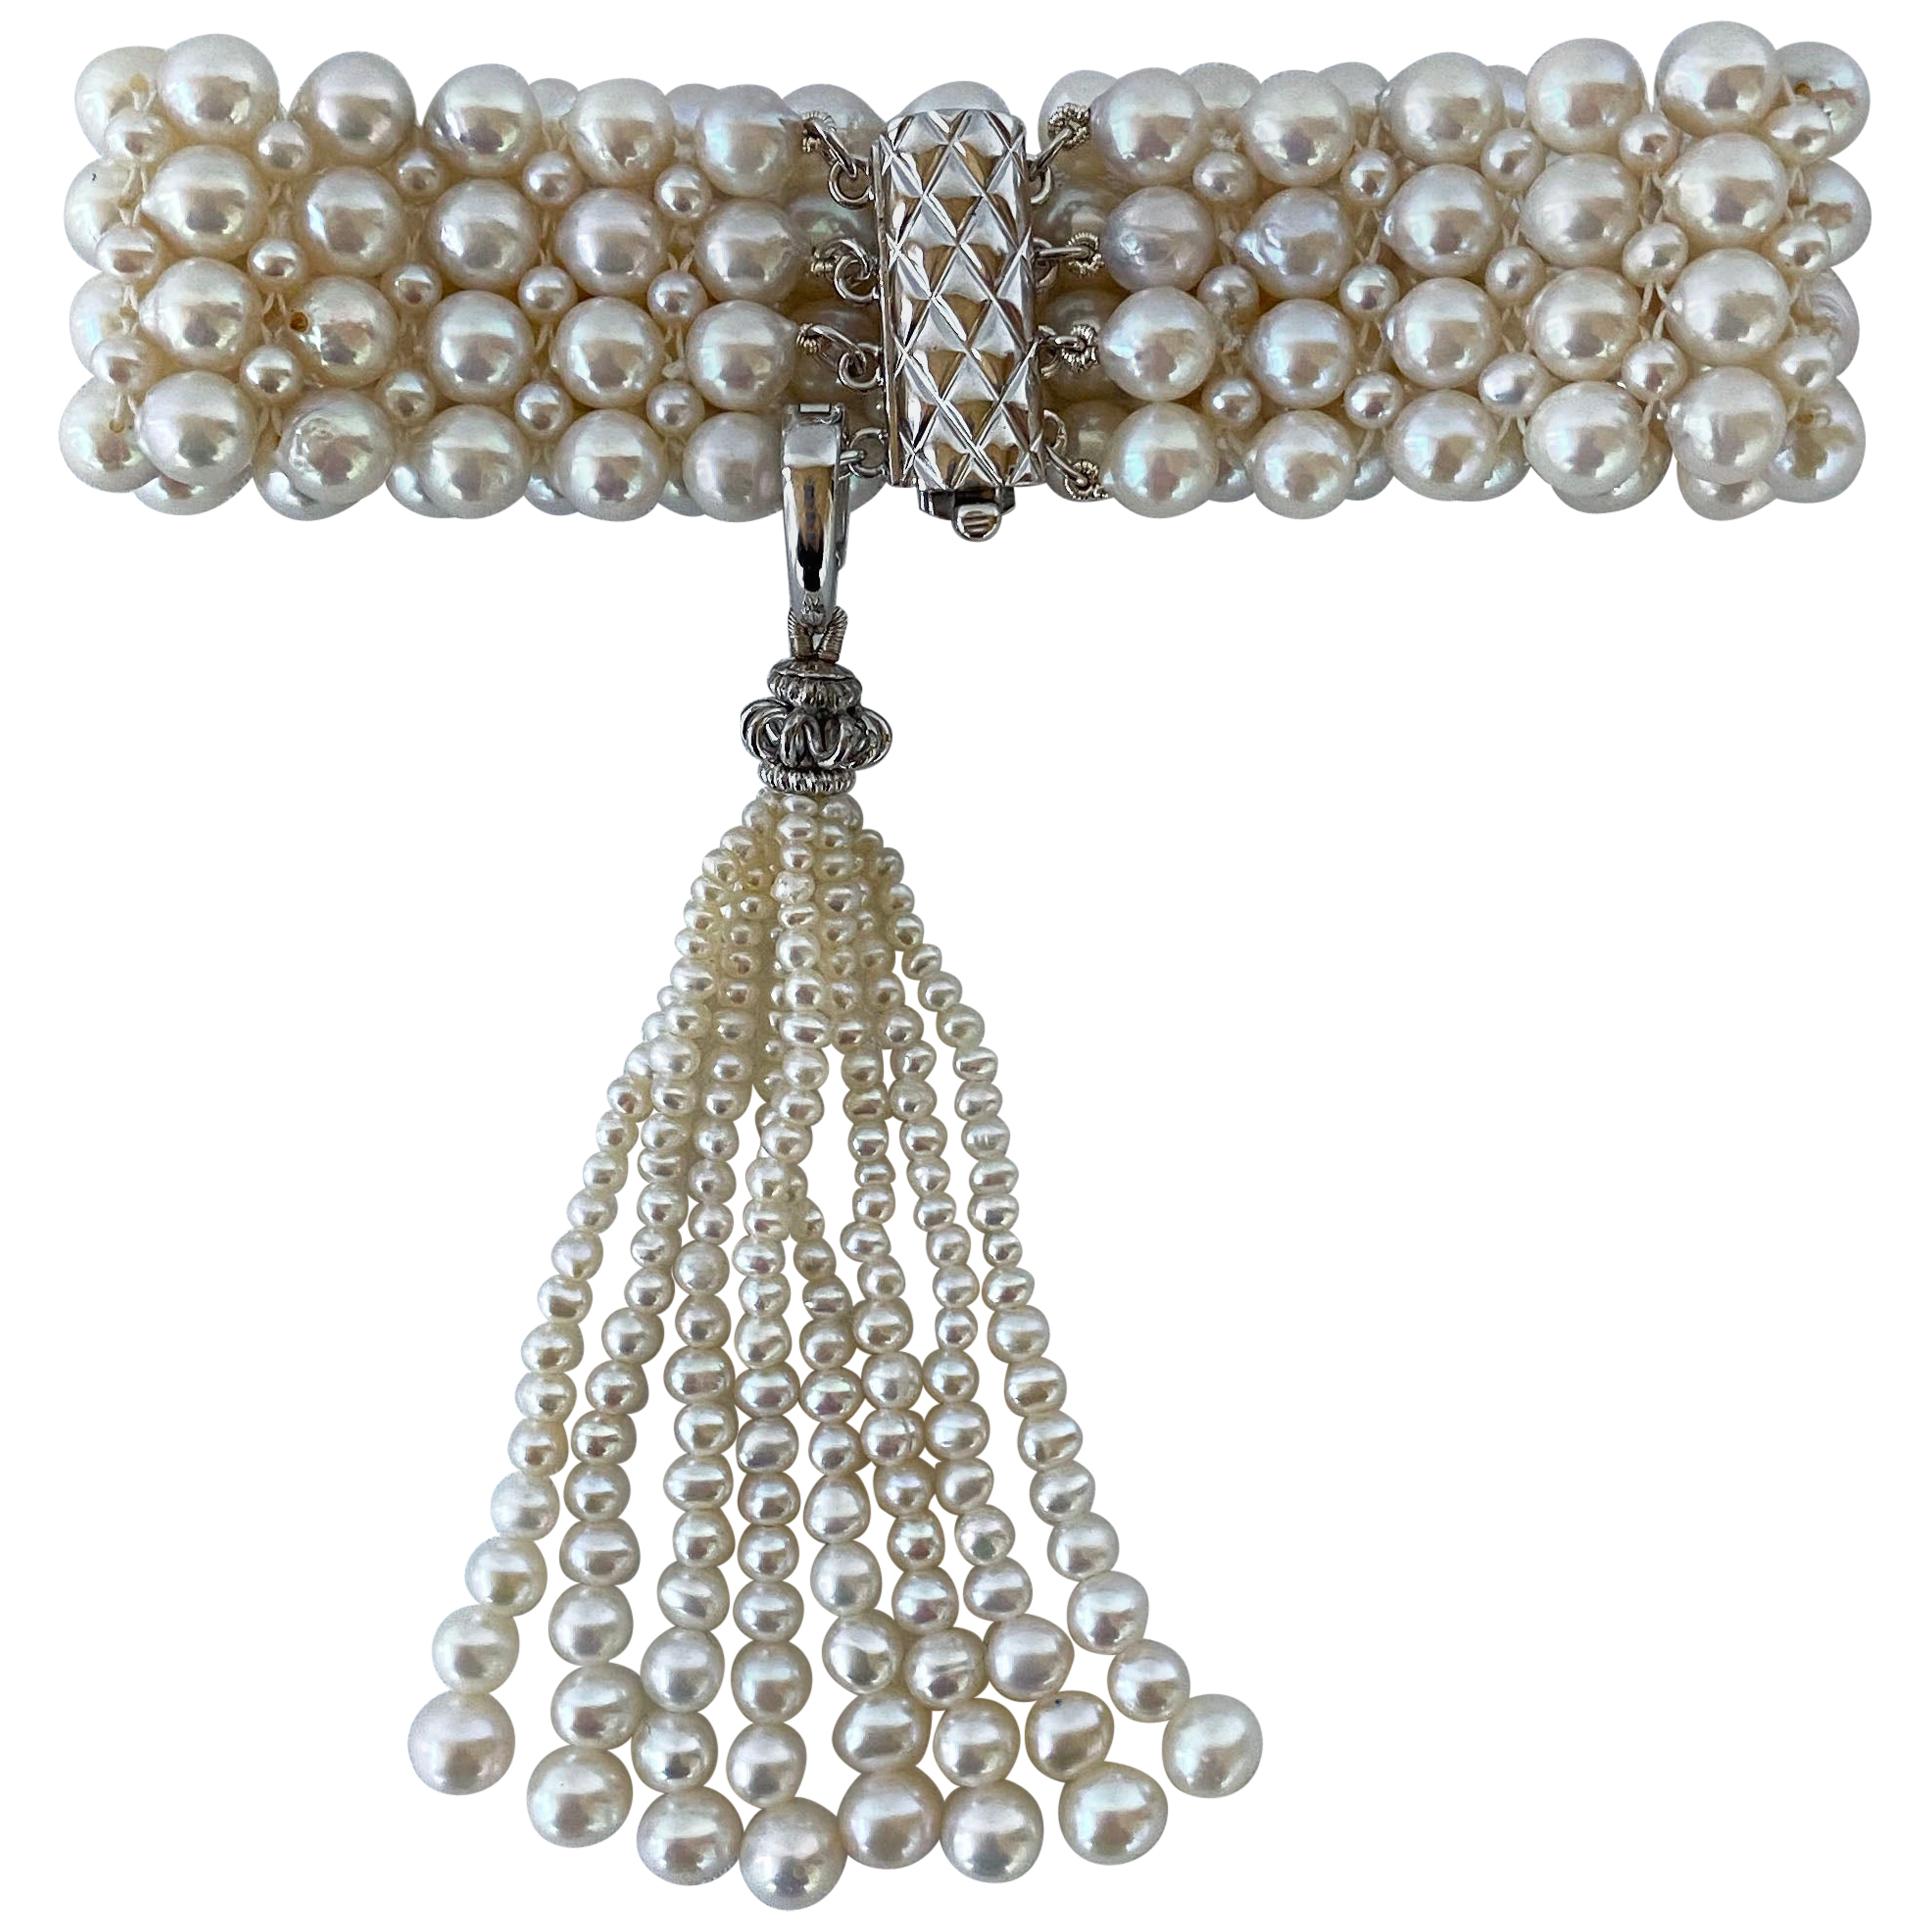 Marina J. "Art Deco Style" Intricately Woven Pearl Bracelet with Pearl Tassel